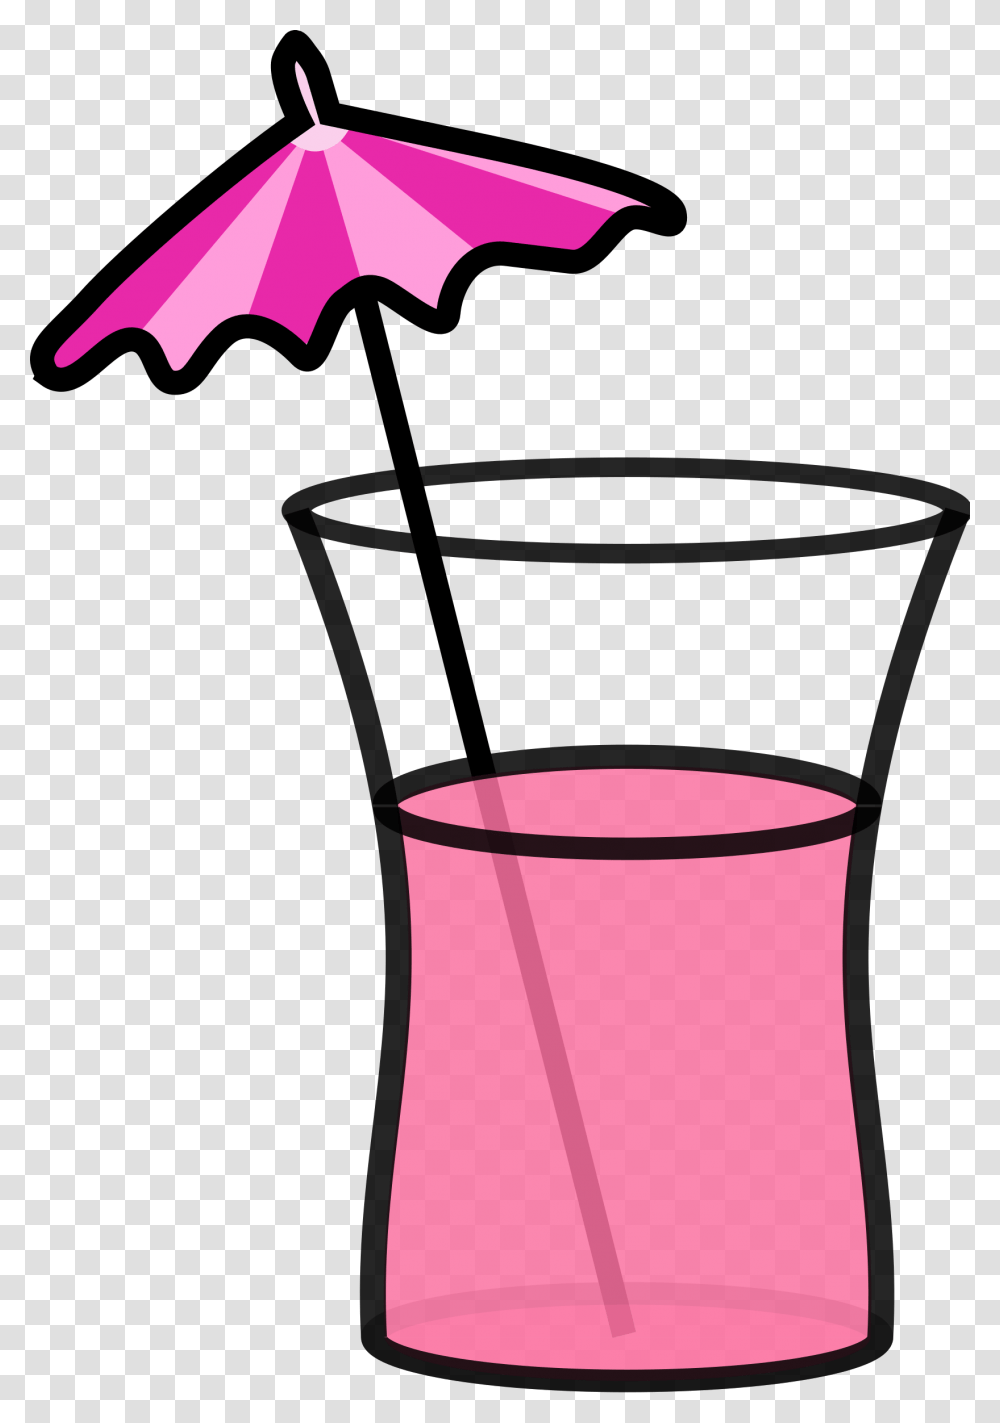 Drink Umbrella Clipart Download Umbrella Drink Pink Drink Clipart, Lamp, Cylinder Transparent Png